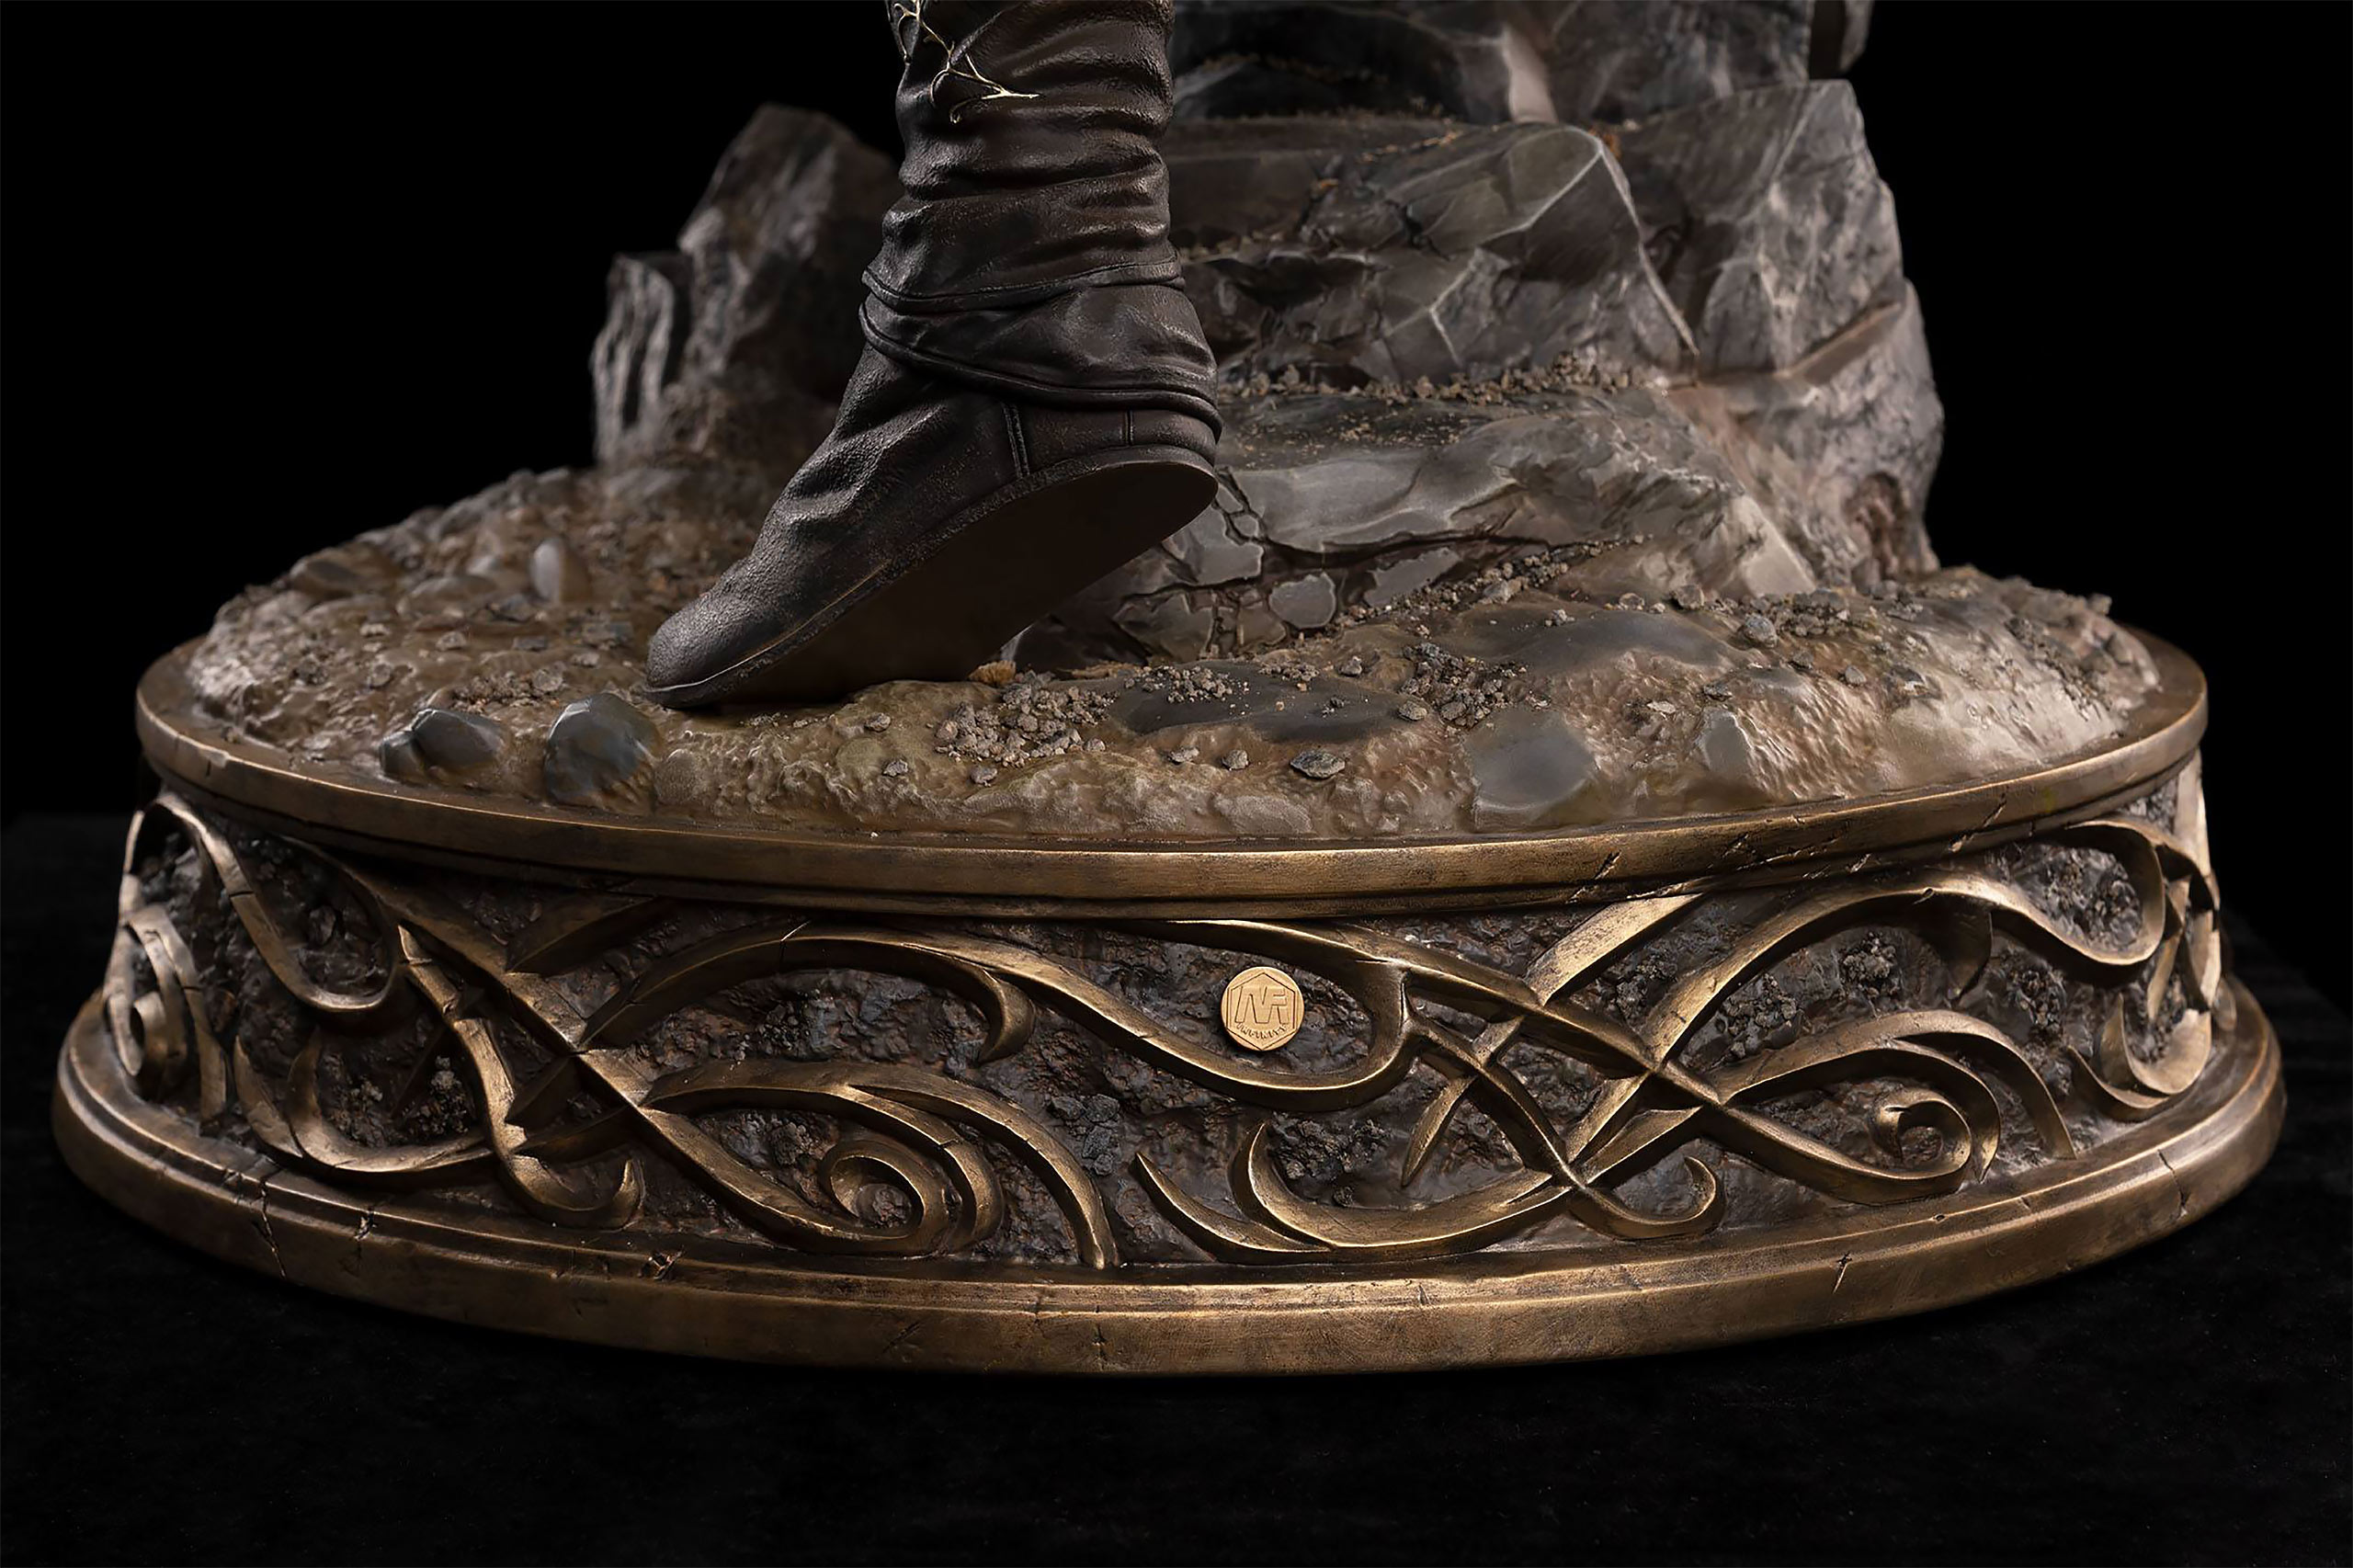 Lord of the Rings - Legolas Premium Collector Statue 1:2